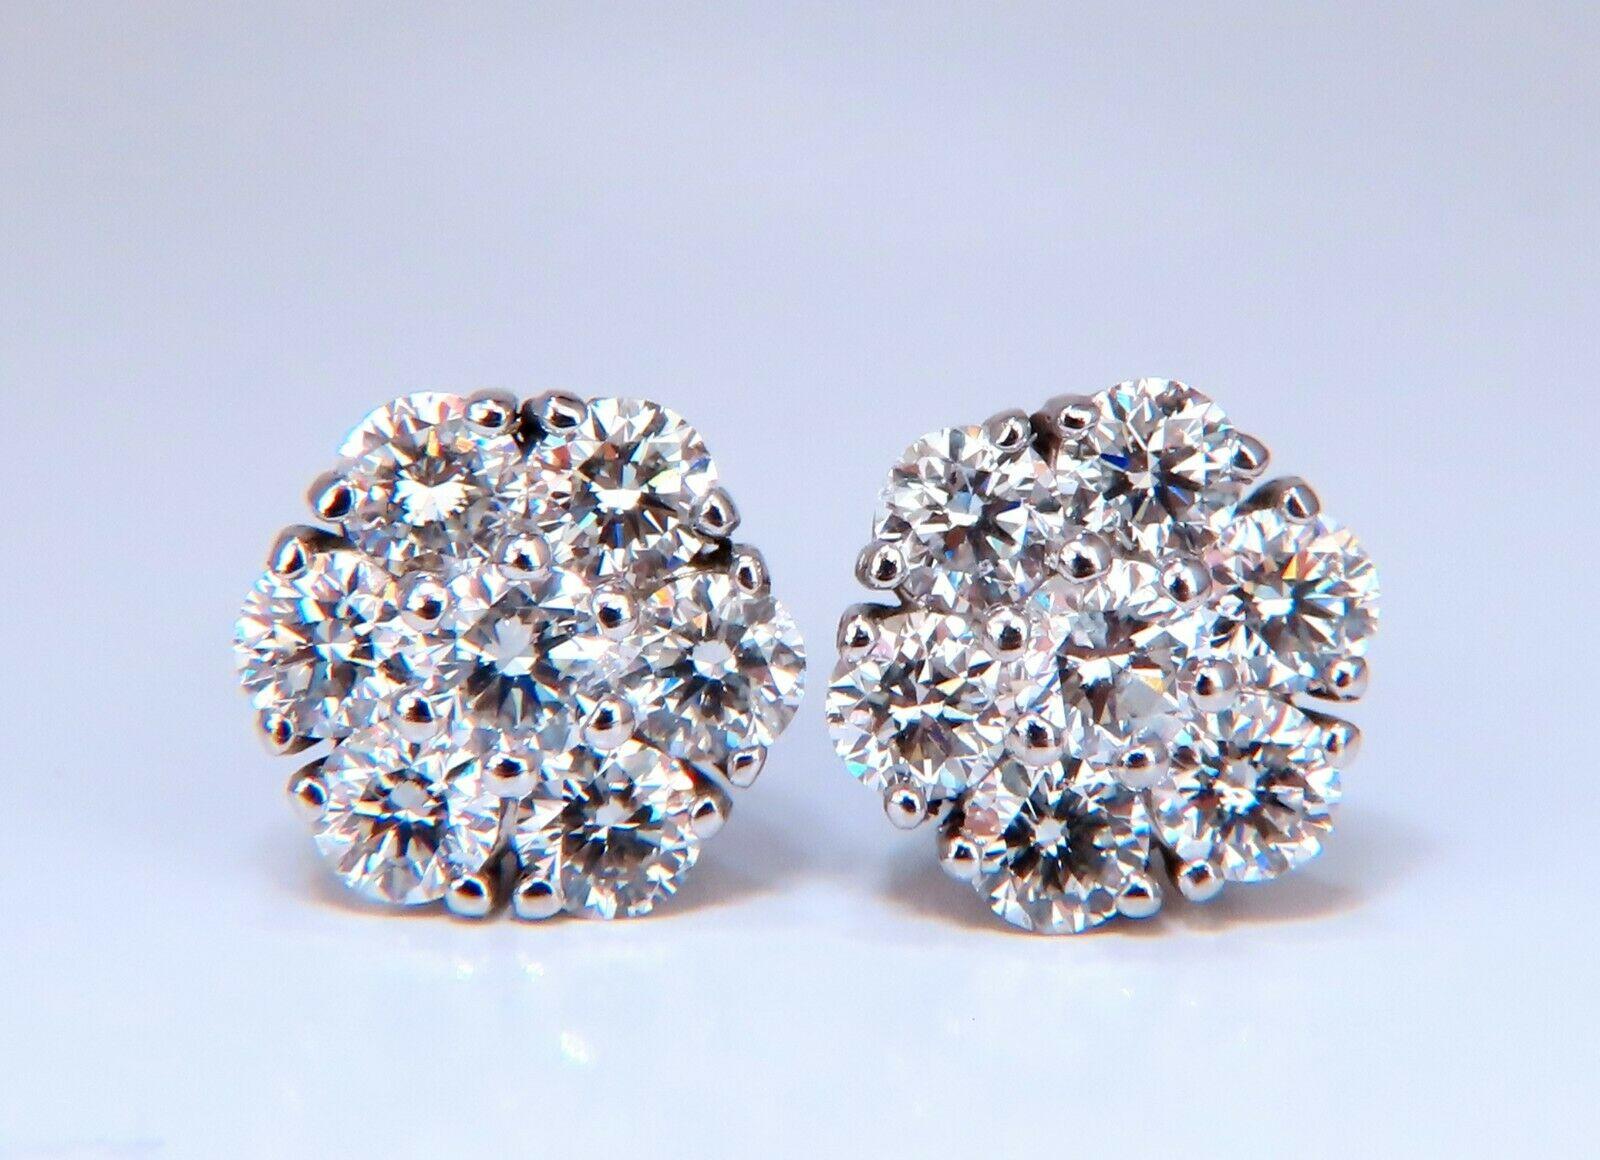 Floreta cluster snowflake diamond earrings.

1.70 carat natural round diamonds

G color vs2 clarity

14 karat white gold 3.6 g

Earrings measure 10mm wide

$,8,000 appraisal certificate to accompany